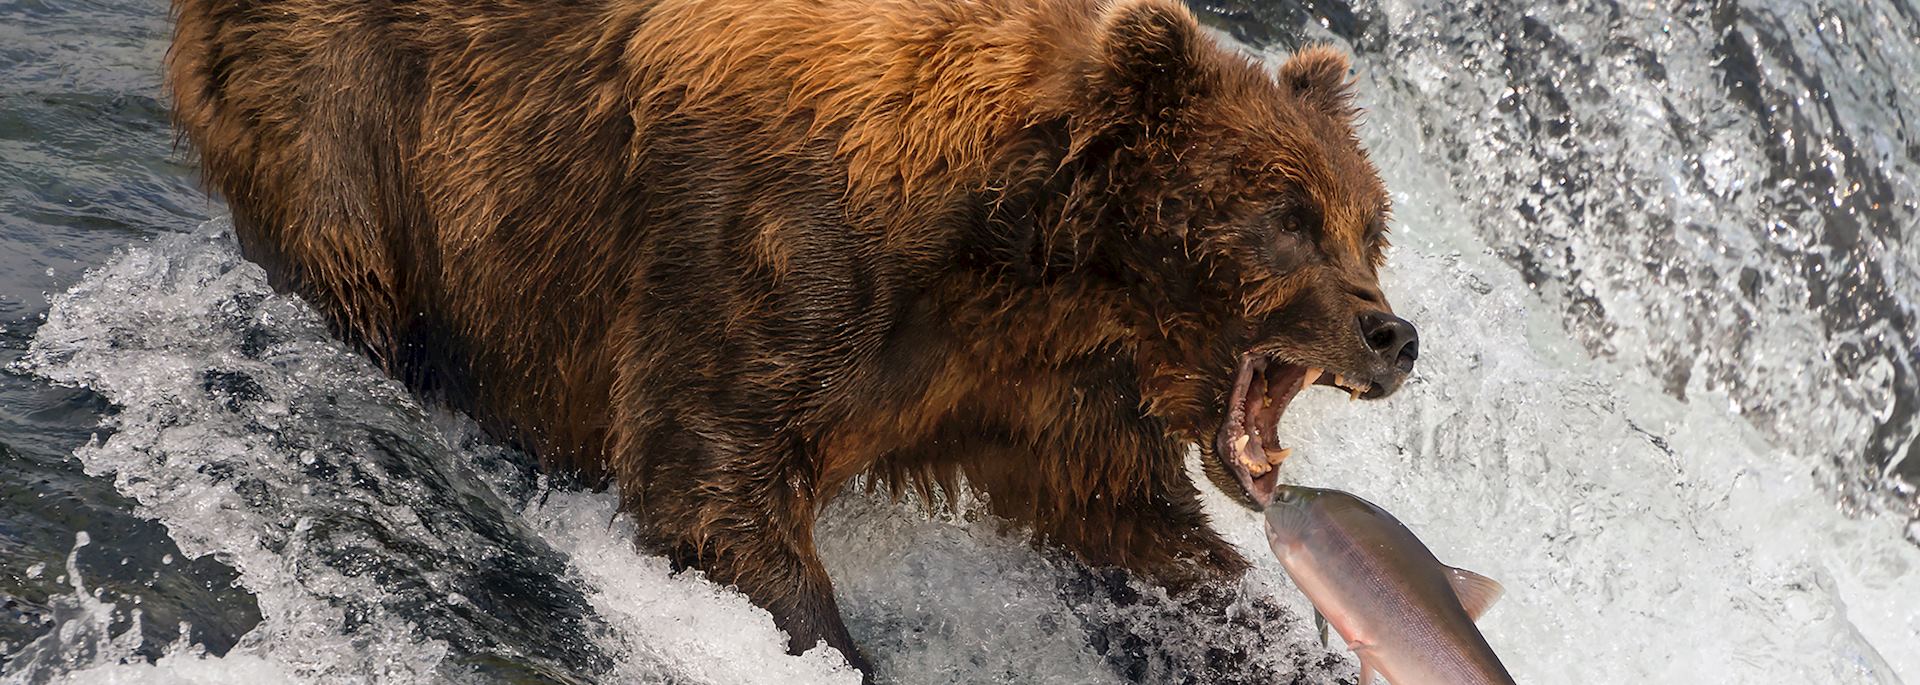 Grizzly bear, Brooks Falls, Alaska